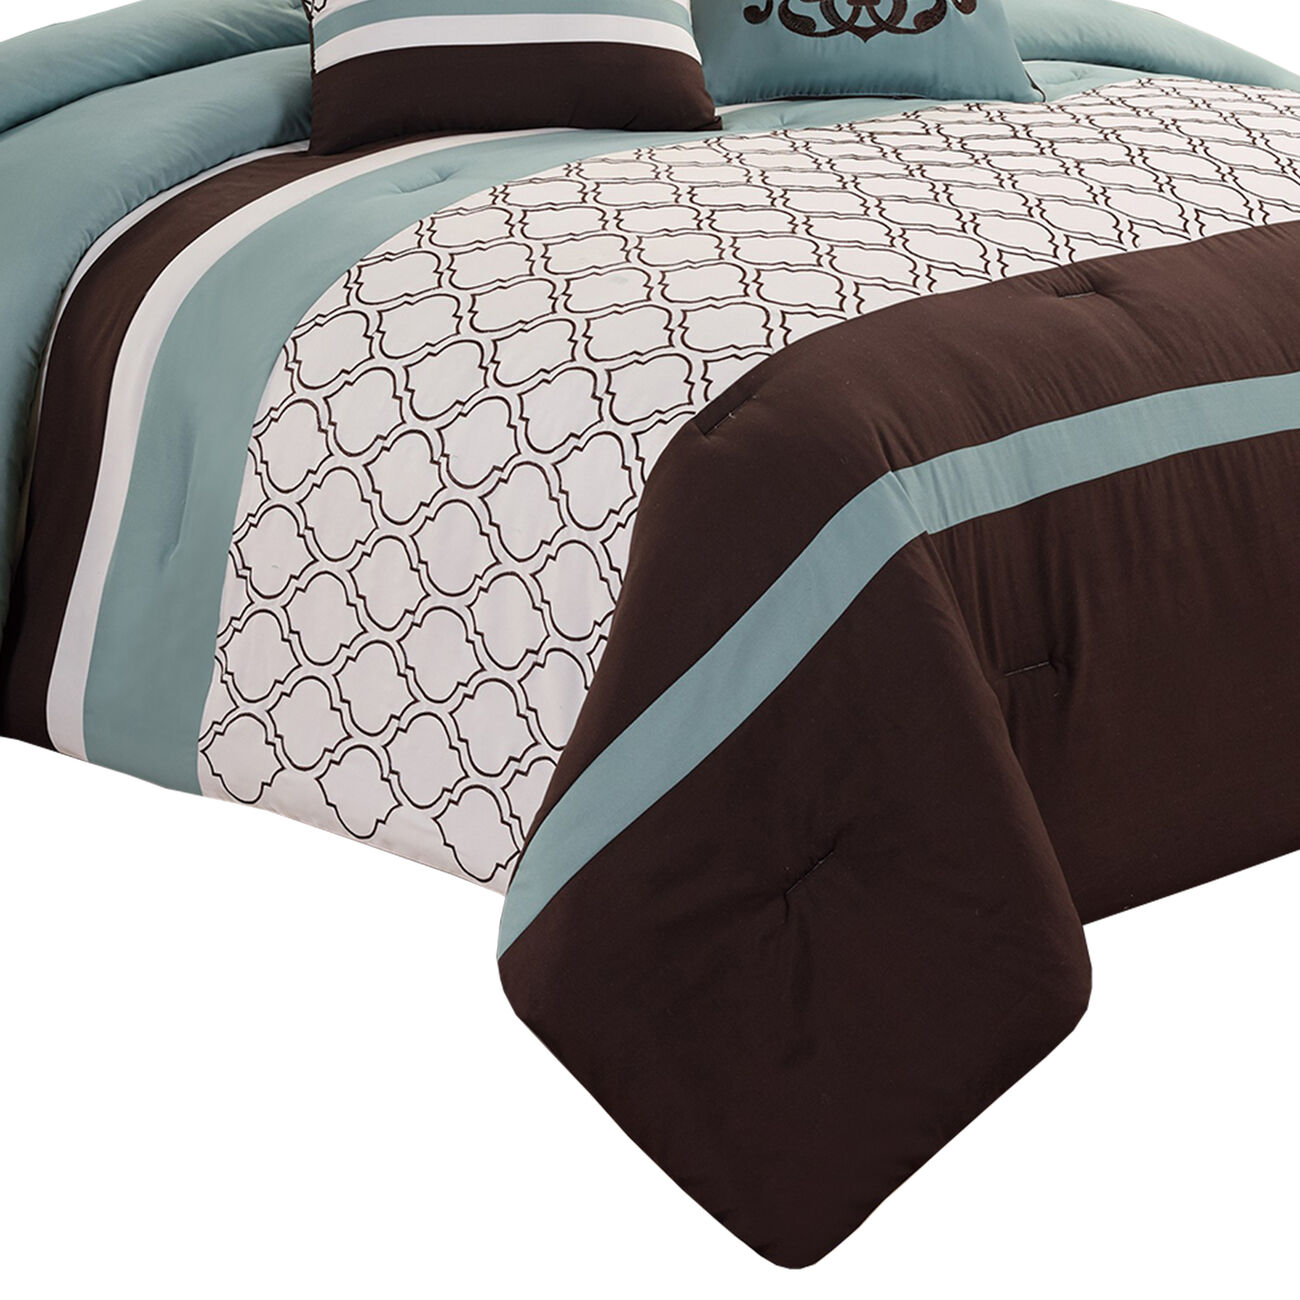 Quatrefoil King Size 8 Piece Fabric Comforter Set , Brown and Blue